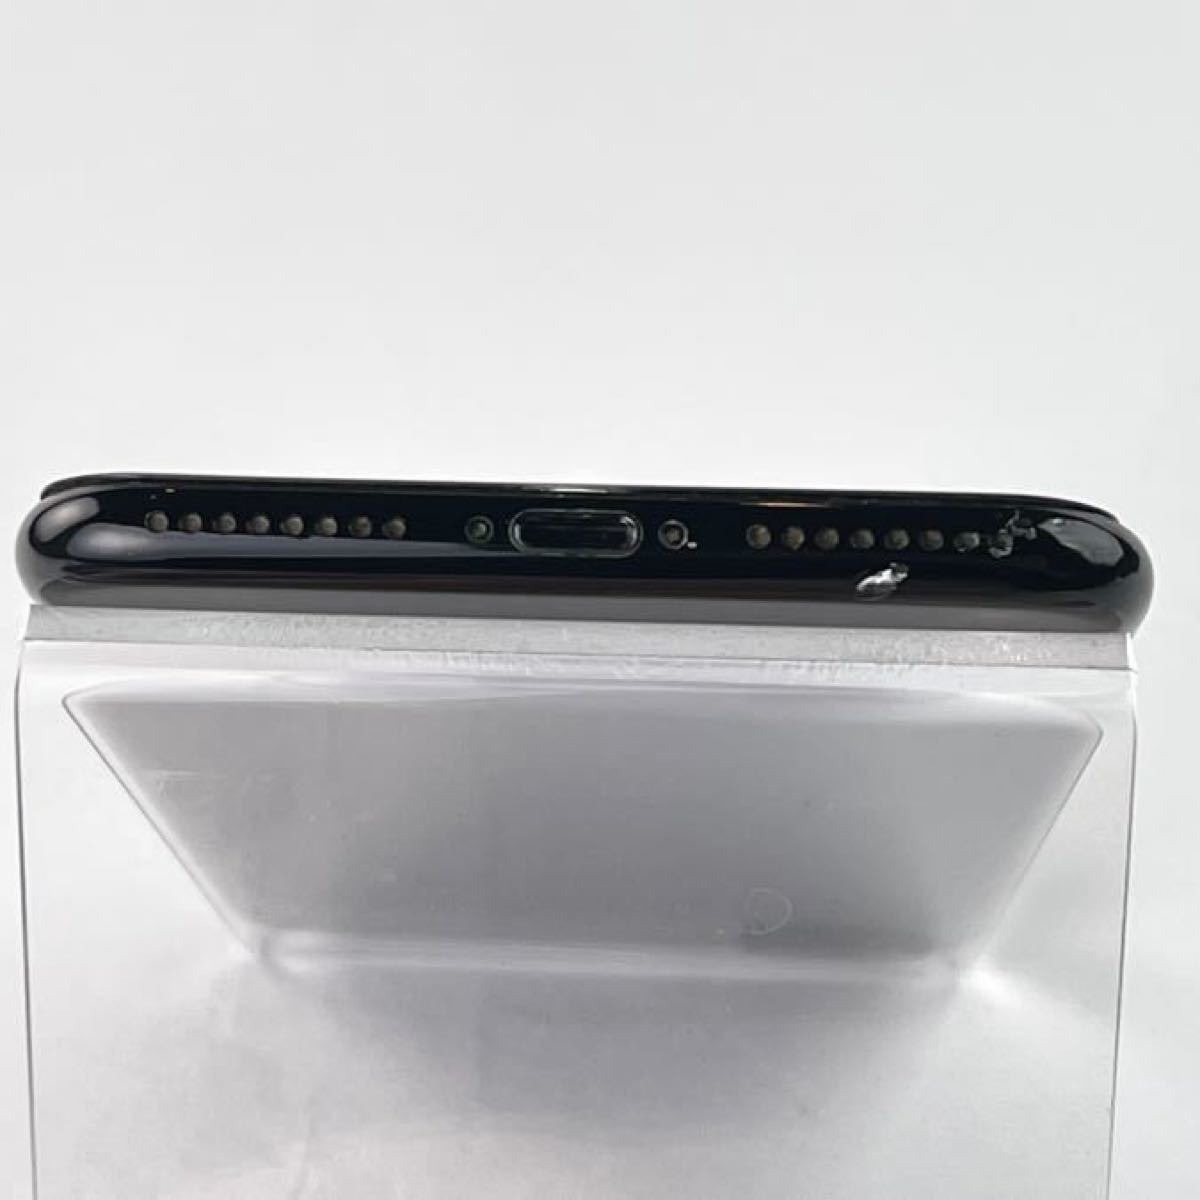 iPhone7 Plus 128GB jet black 中古iphone 初期化済 中古スマホ ドコモ